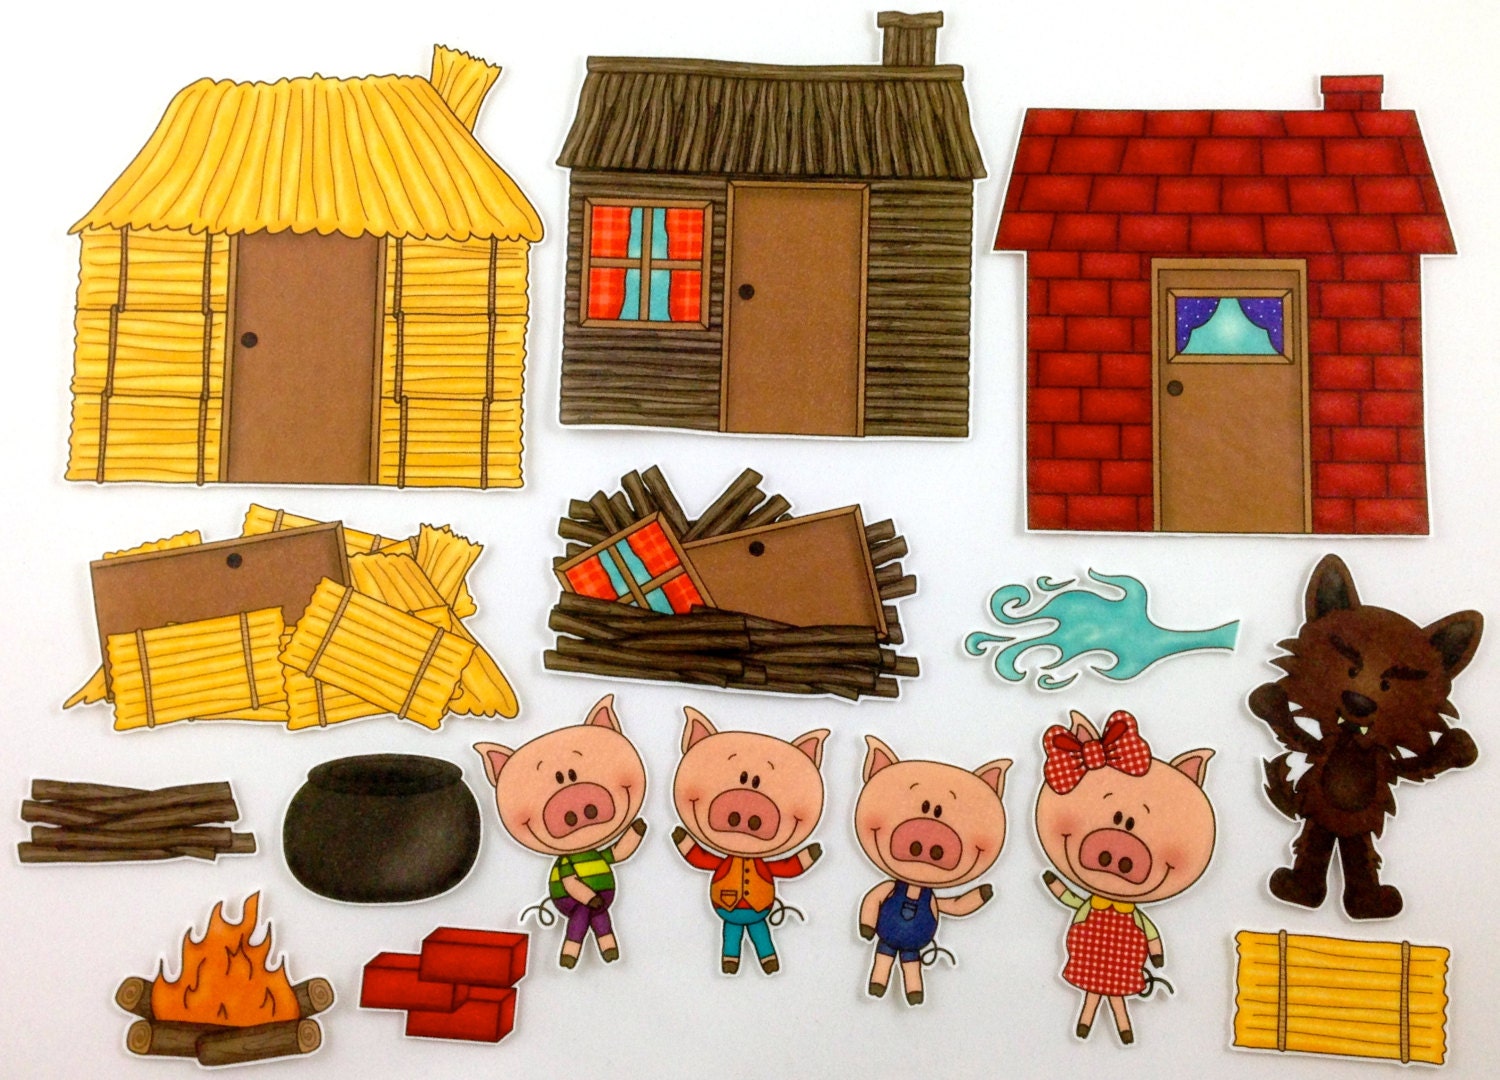 three-little-pigs-felt-board-story-set-by-bymaree-on-etsy